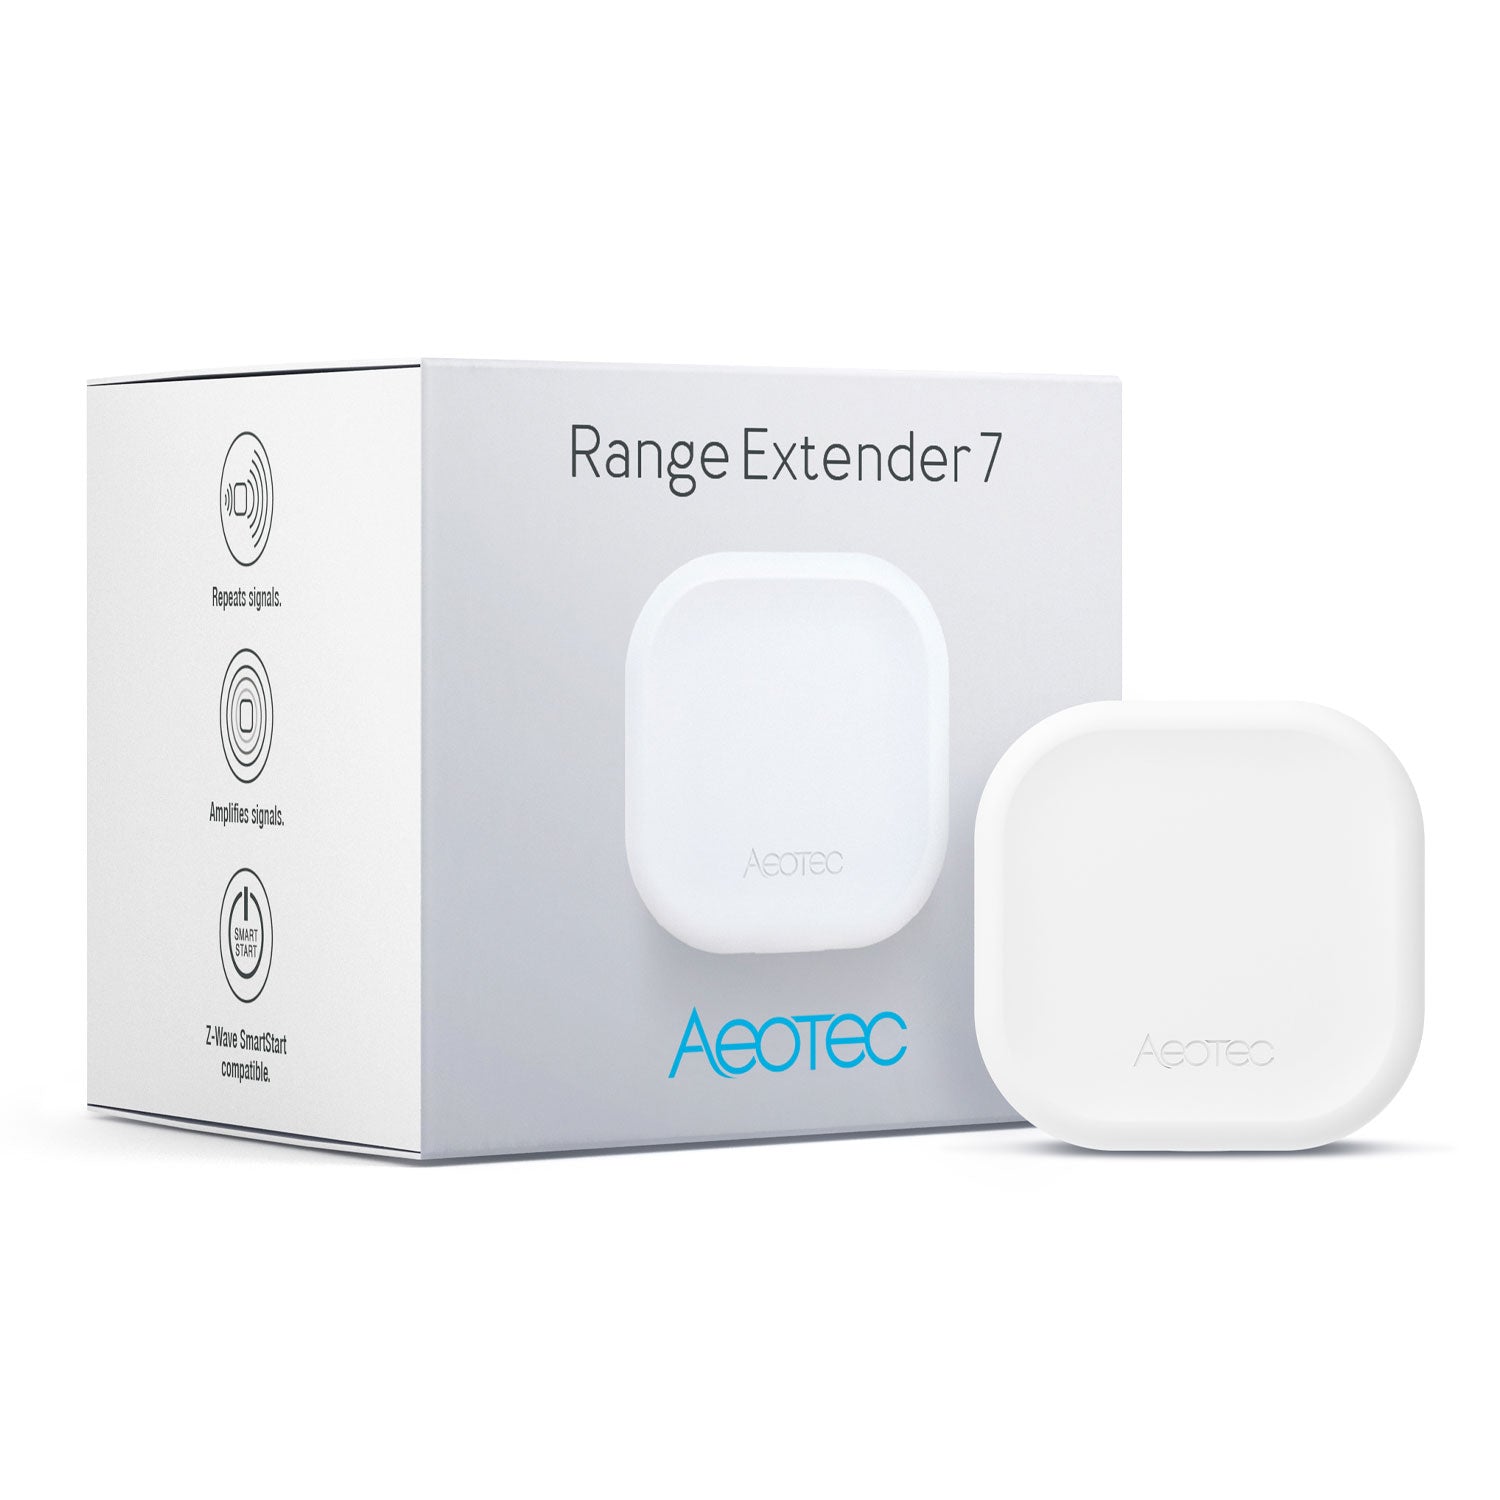 Aeotec Range Extender 7 Verstärker Verpackung